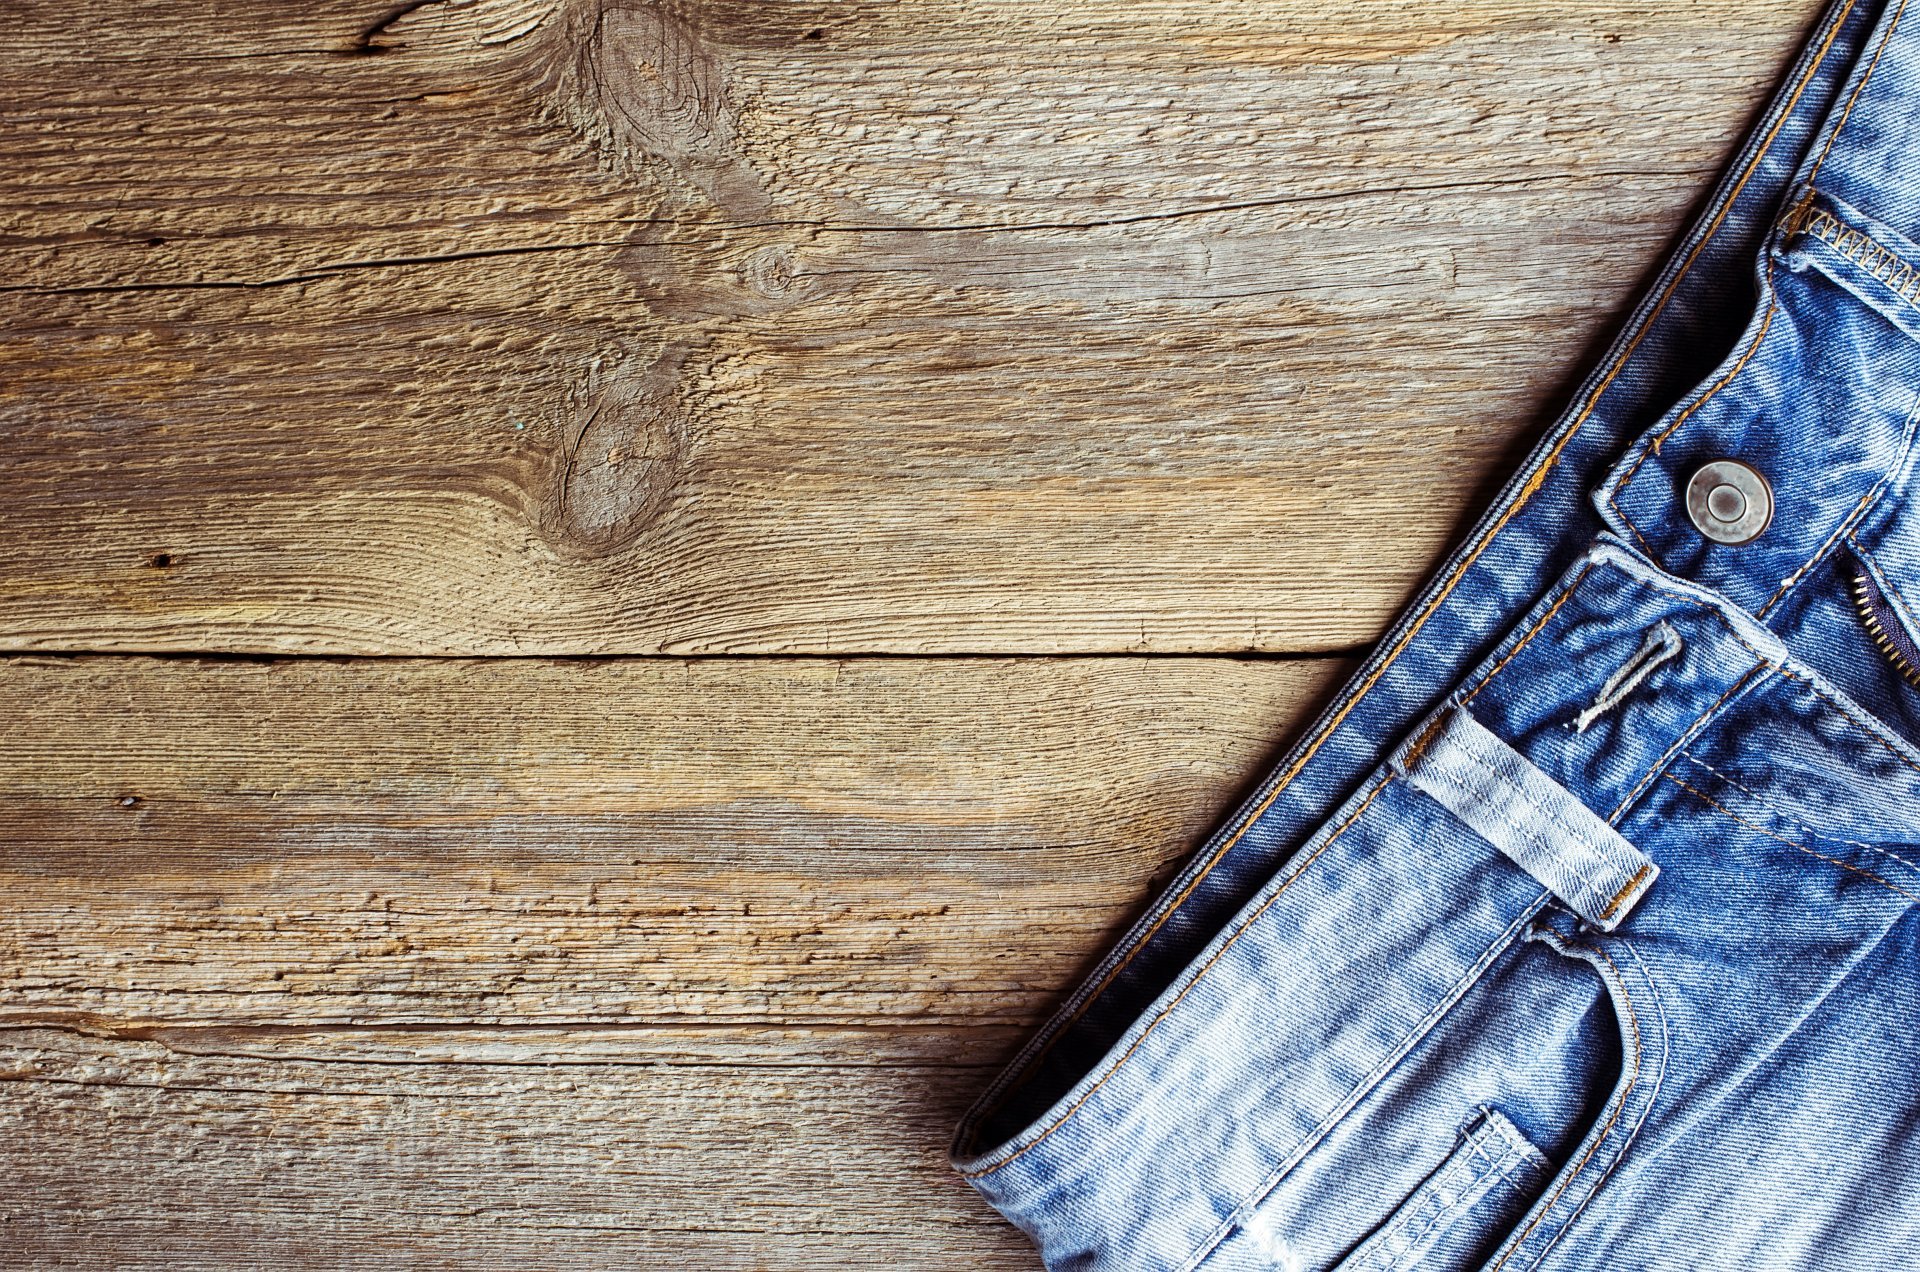 jeans wallpaper hd,jeans,denim,clothing,wood,pocket